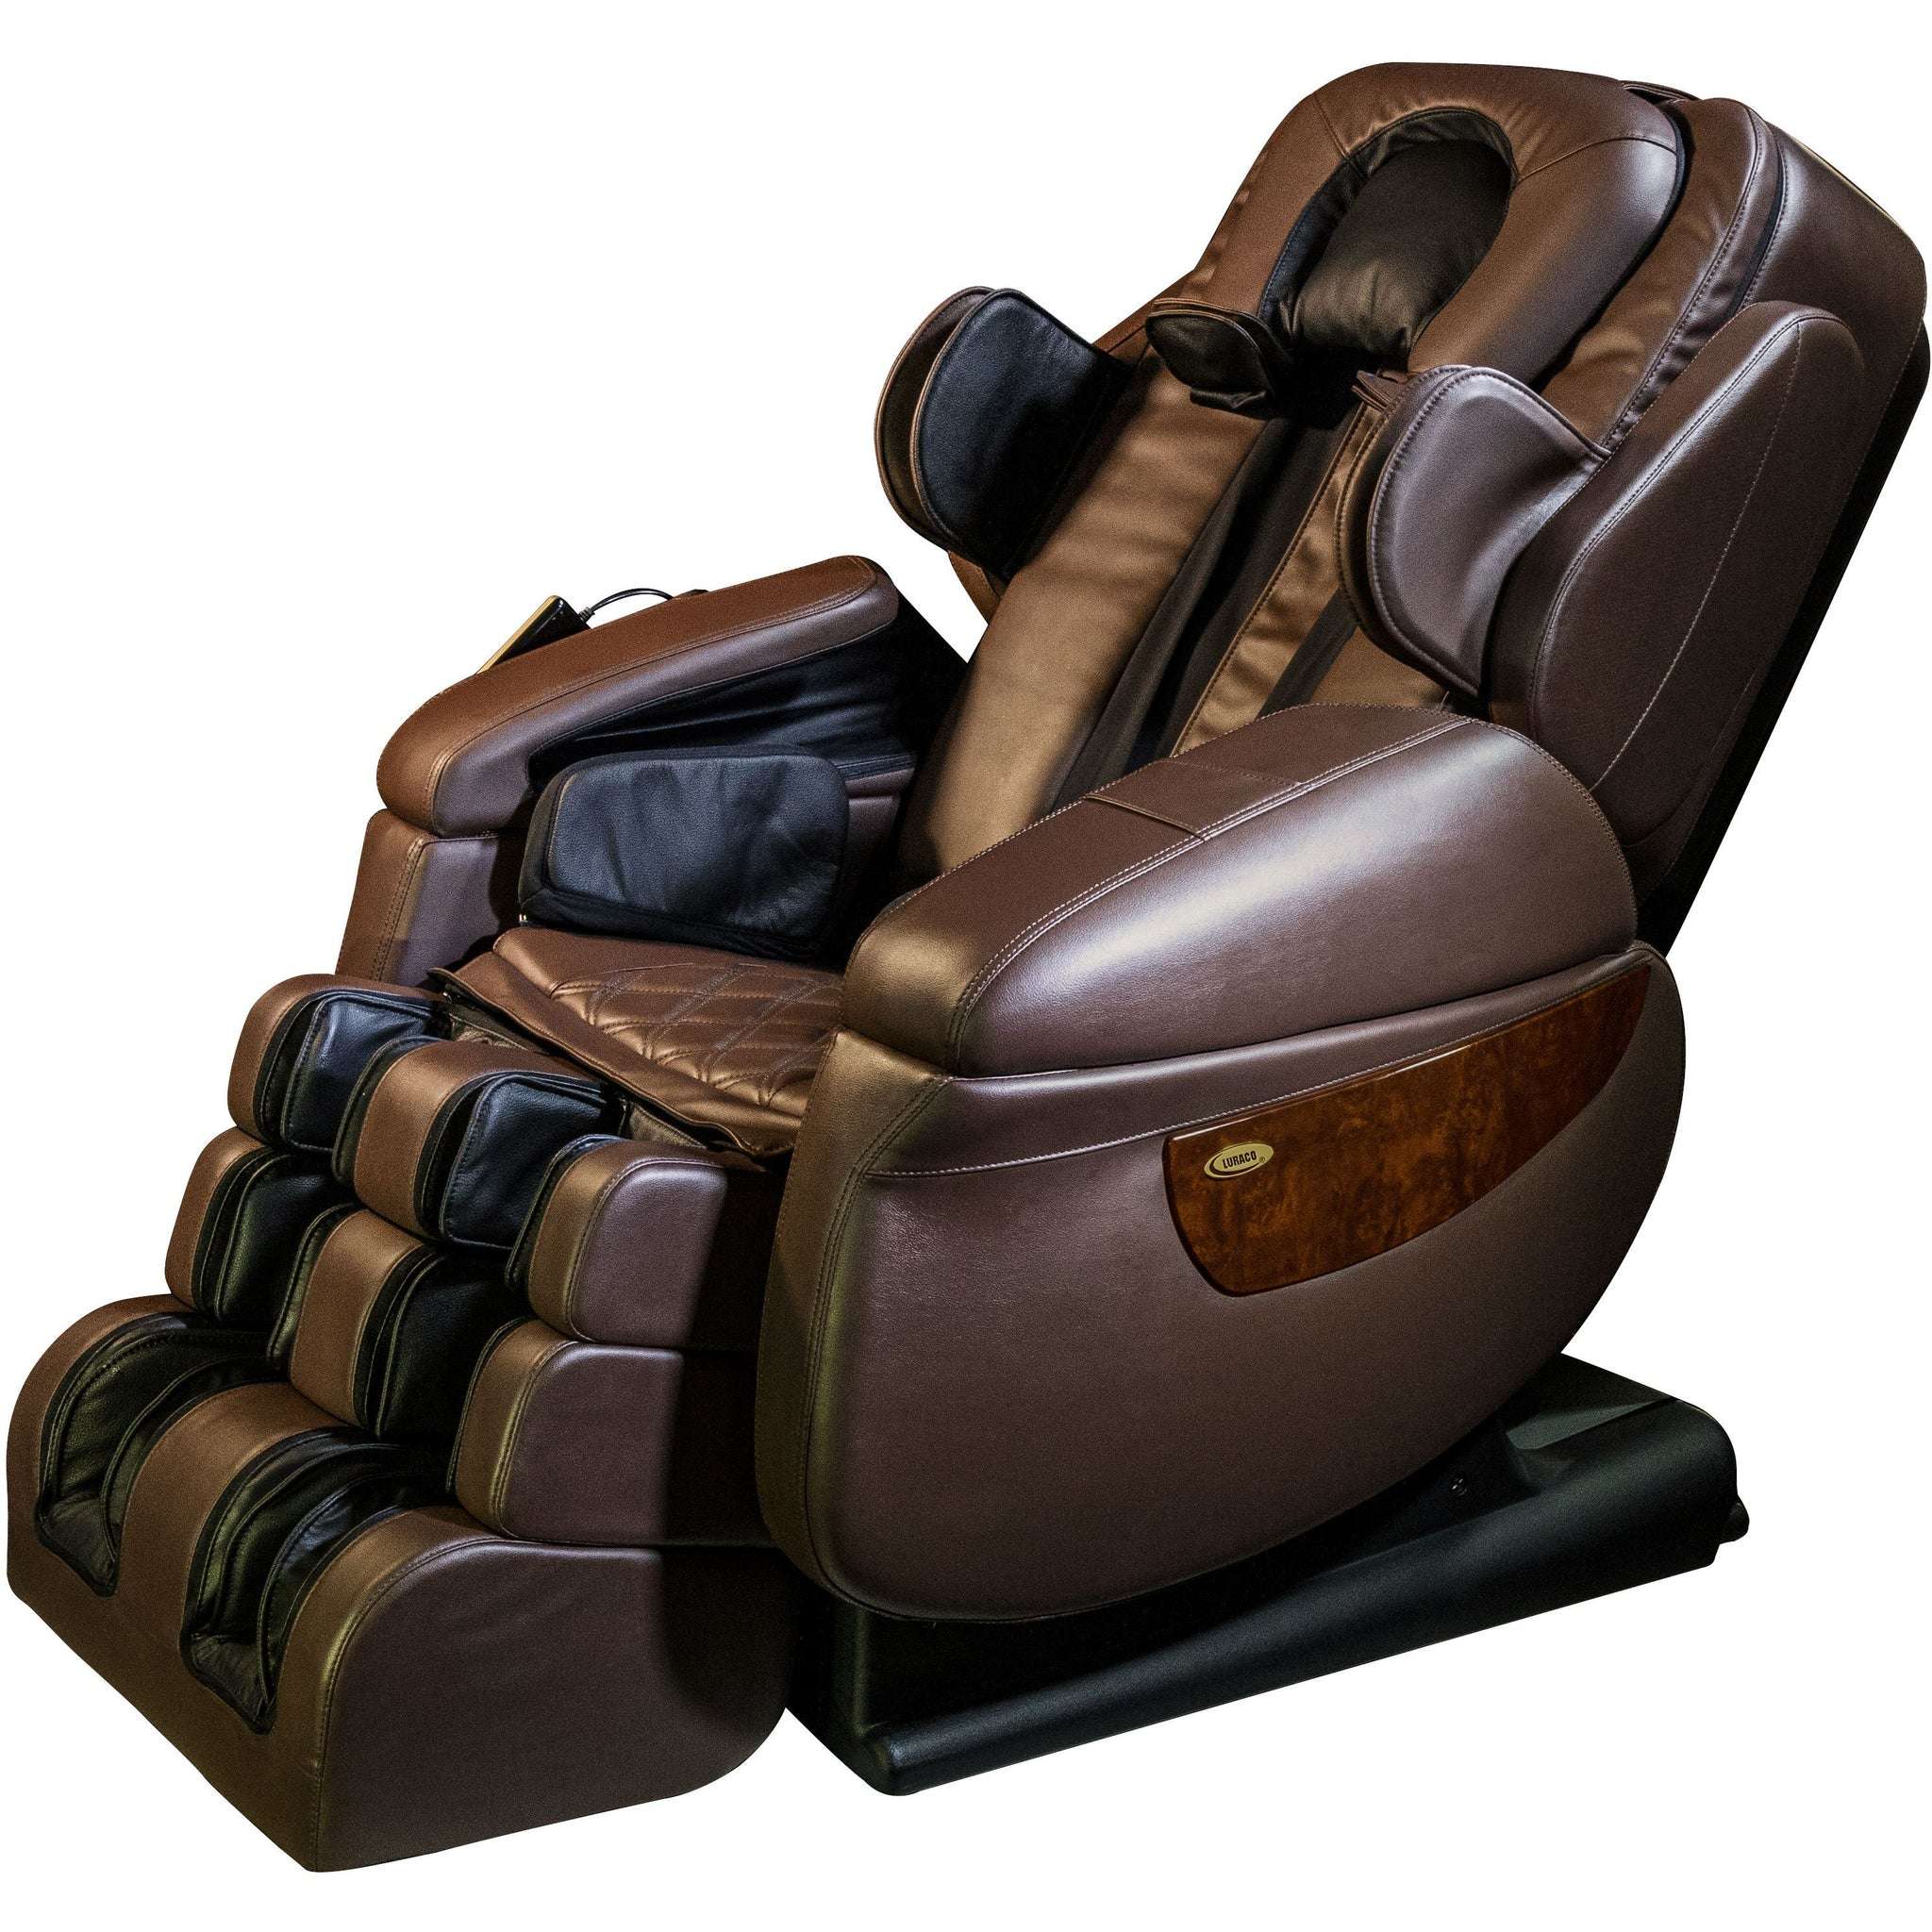 Luraco irobotics 7 Plus Medical Massage Chair